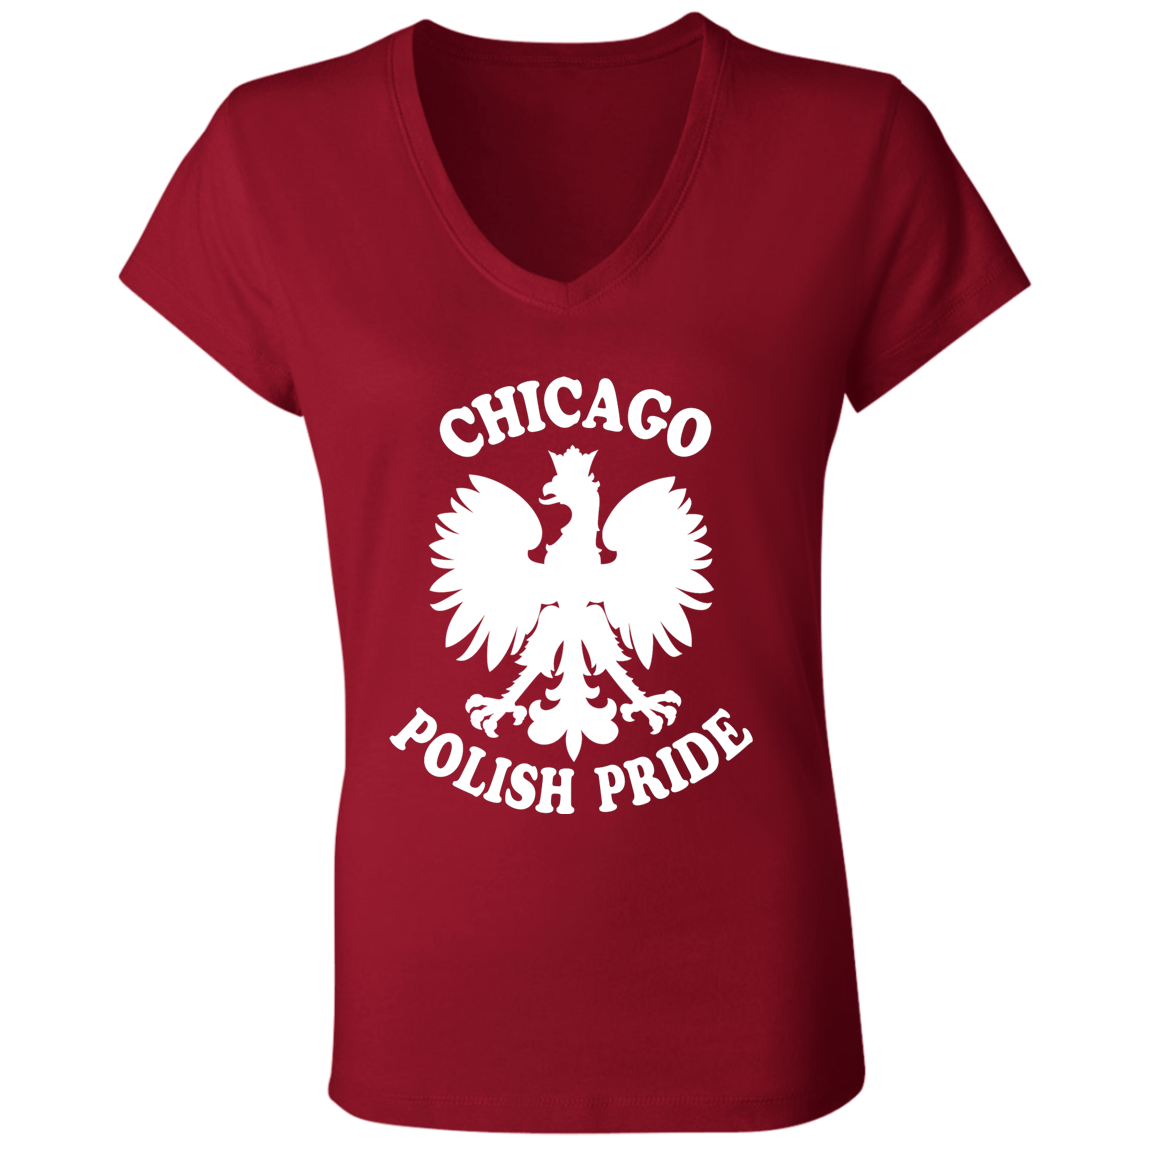 Chicago Polish Pride Apparel CustomCat   